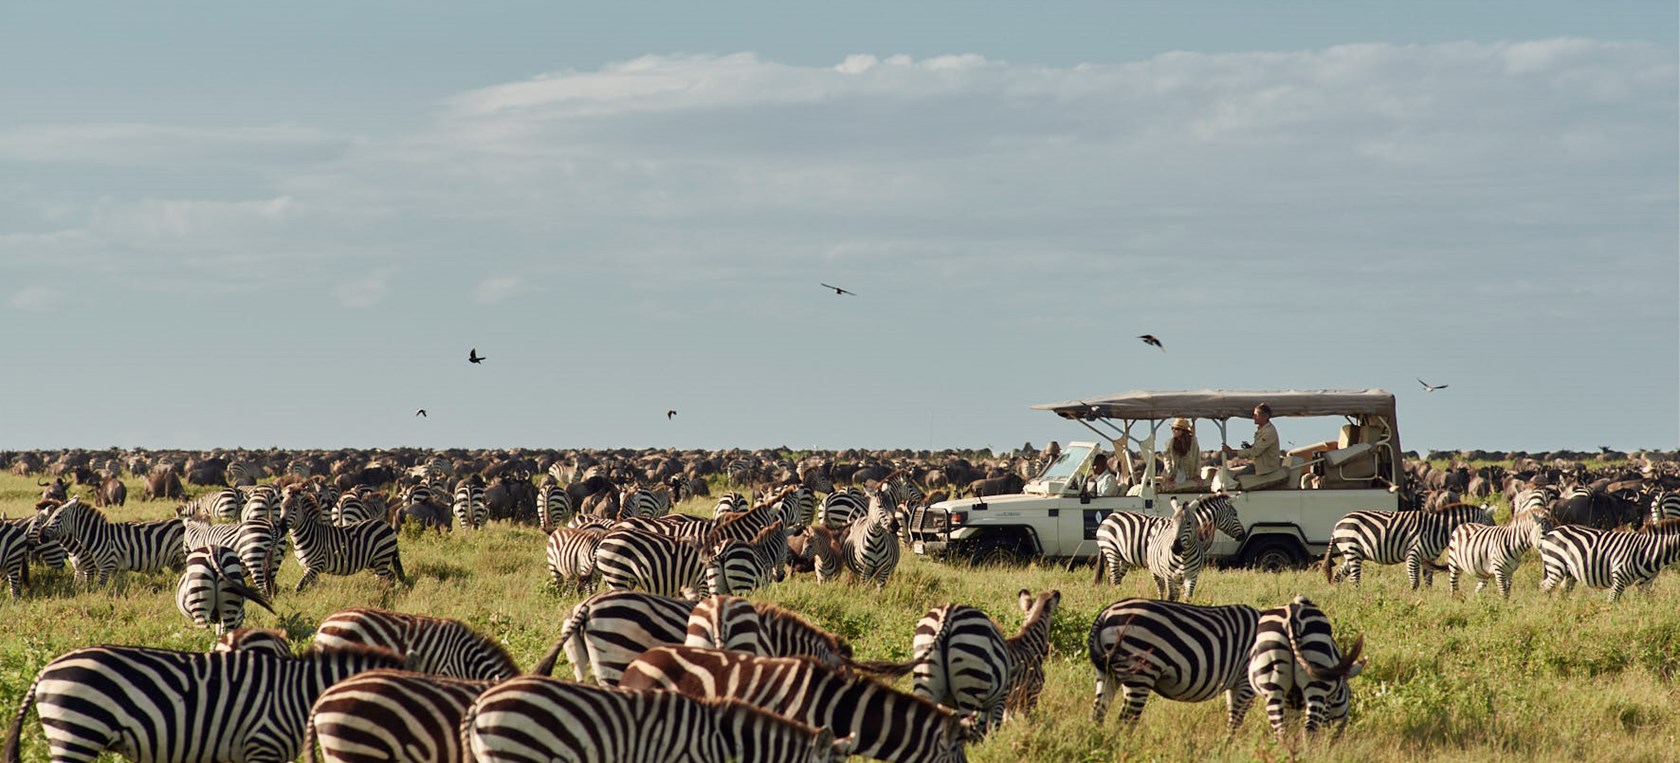 Day 08: Serengeti National Park – Full Day